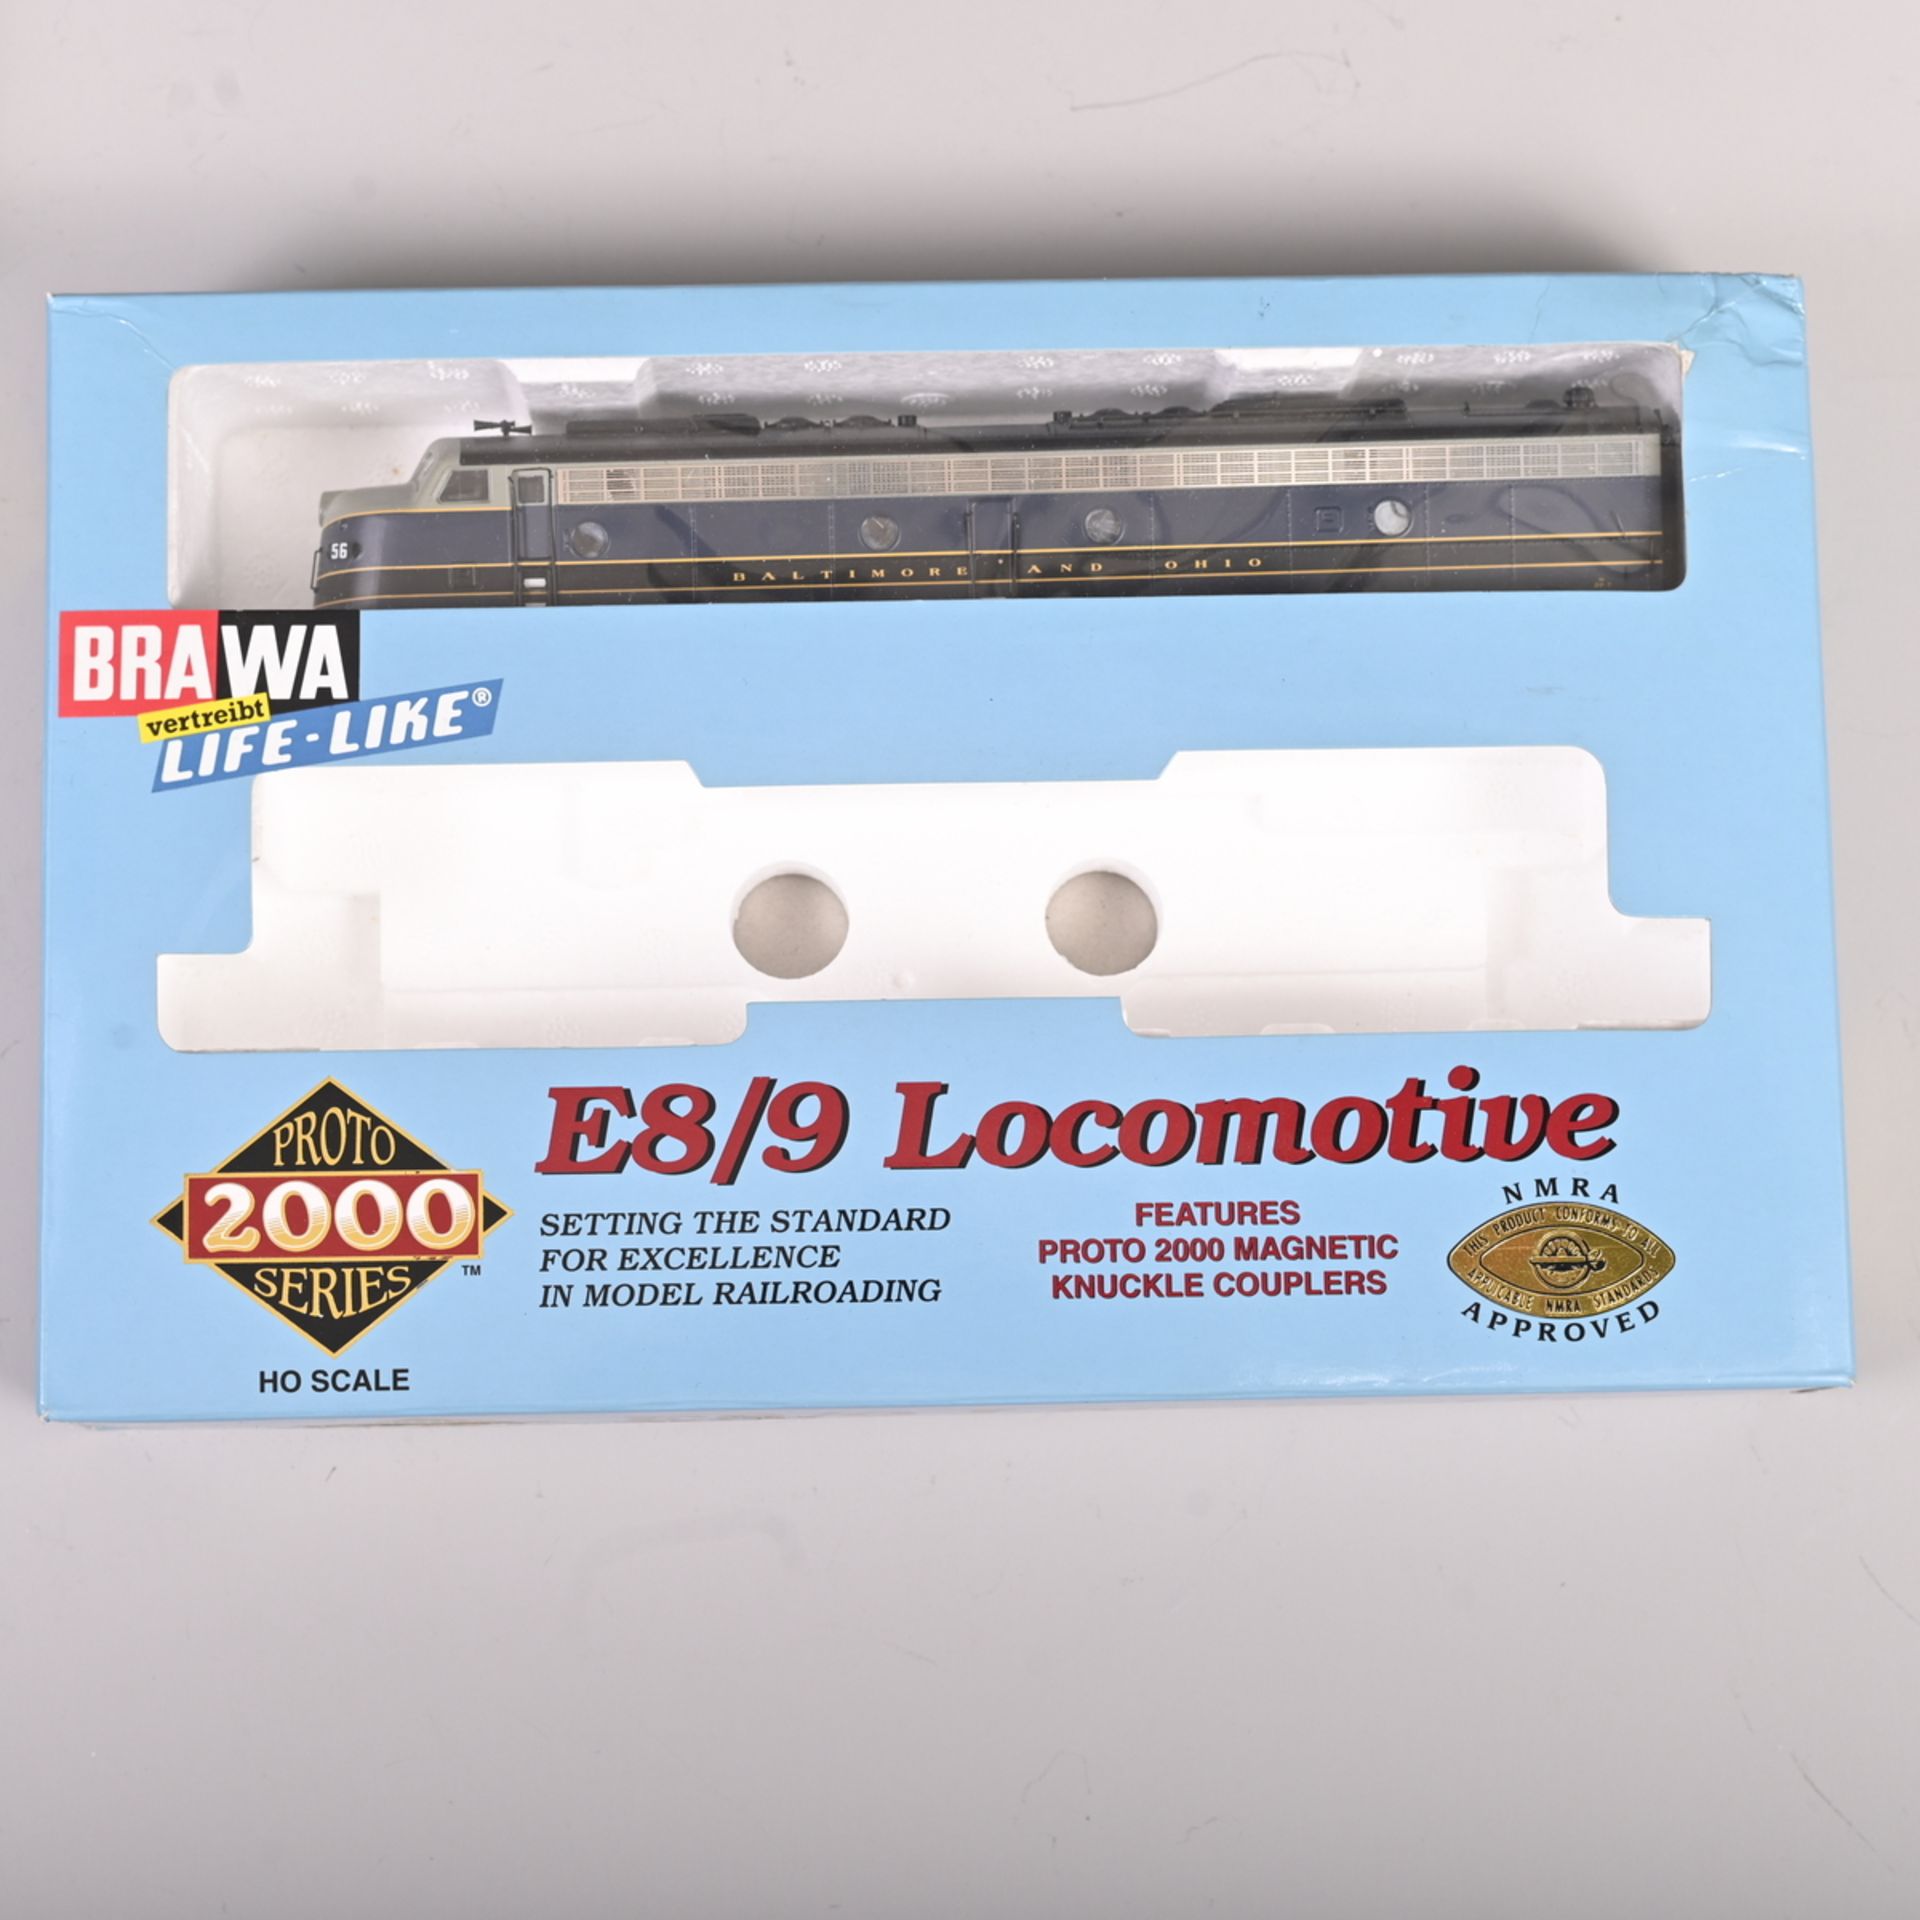 BRAWA LIFE-LIKE Lokomotive E8/9, Protoseries 2000, Spur H0, sehr guter Zustand, im OK